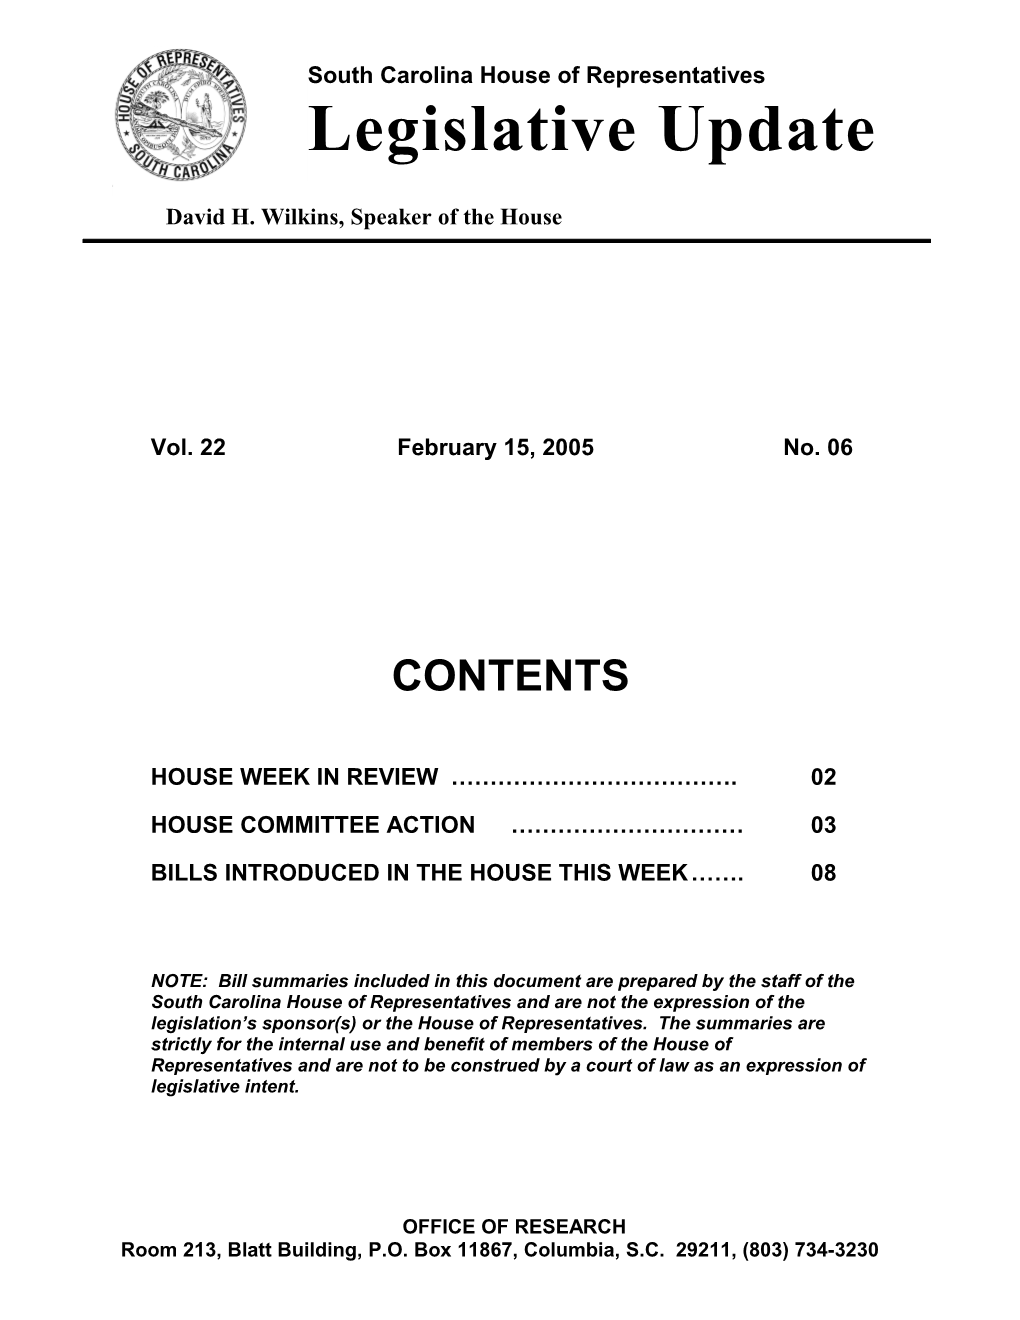 Legislative Update - Vol. 22 No. 06 February 15, 2005 - South Carolina Legislature Online